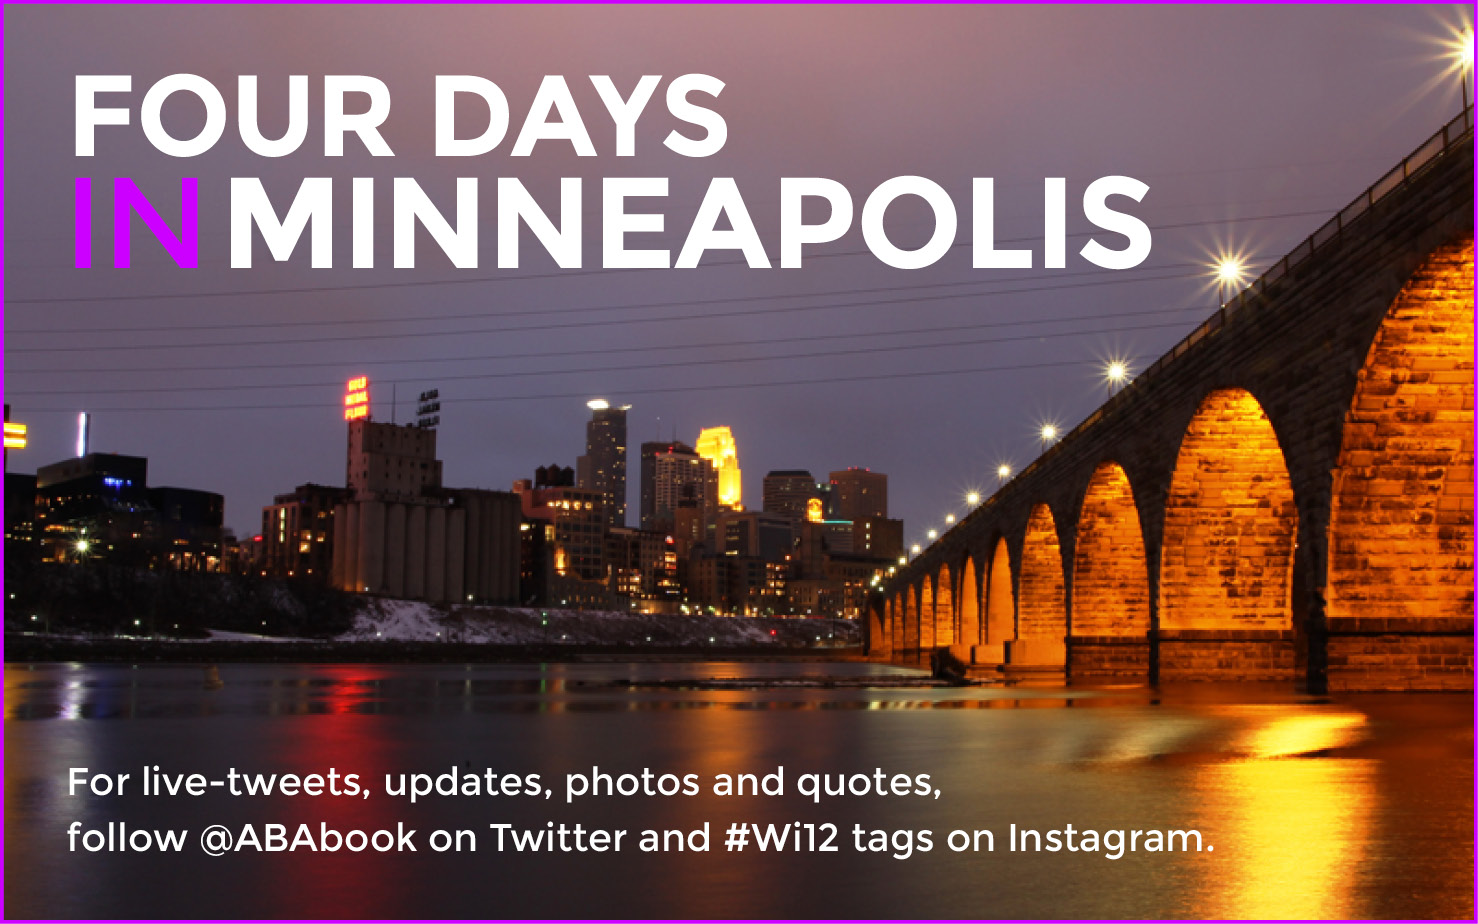 Four Days in Minneapolis over city skyline